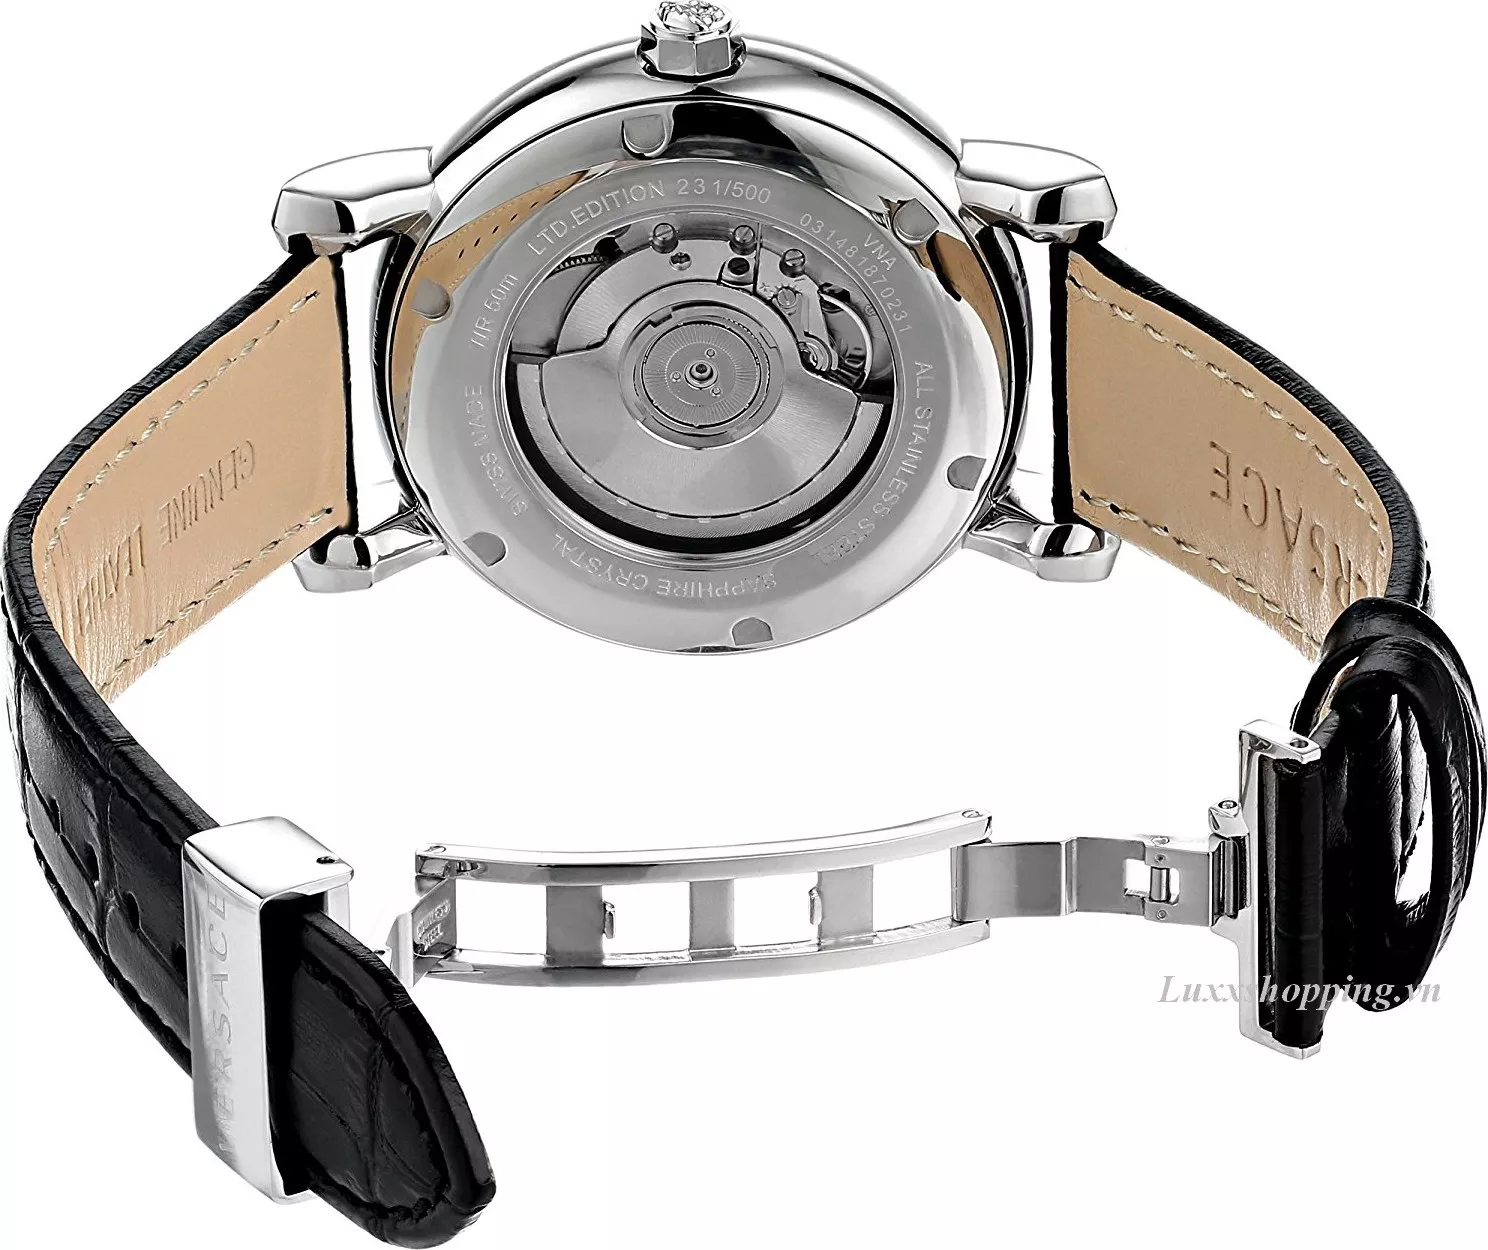 Versace URBAN GENT Automatic Watch 44mm